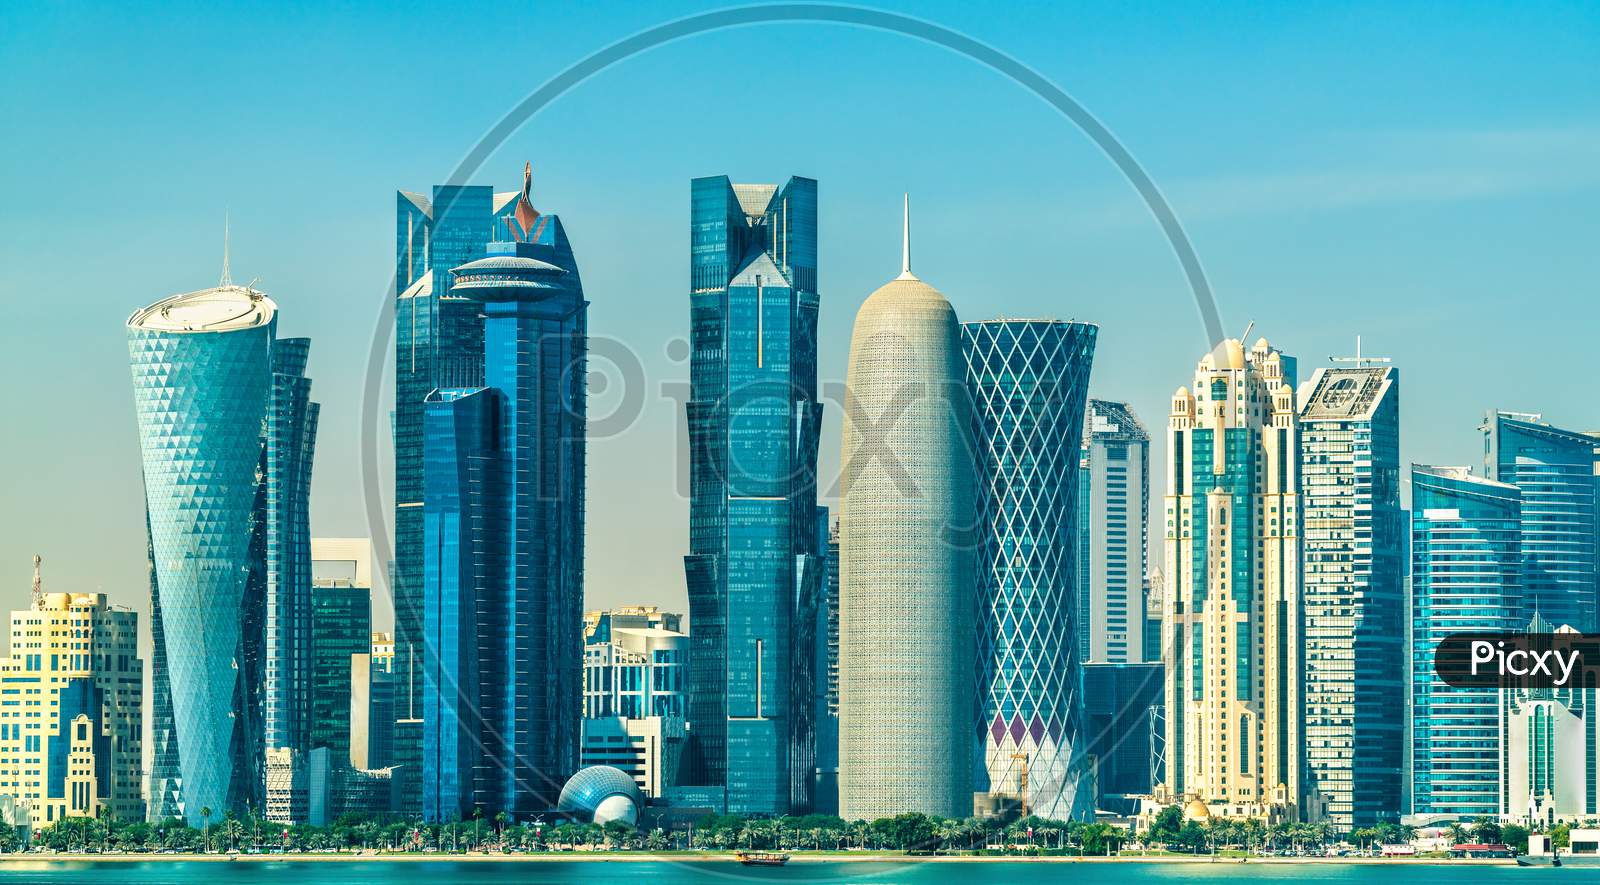 Skyline Of Doha, The Capital Of Qatar.